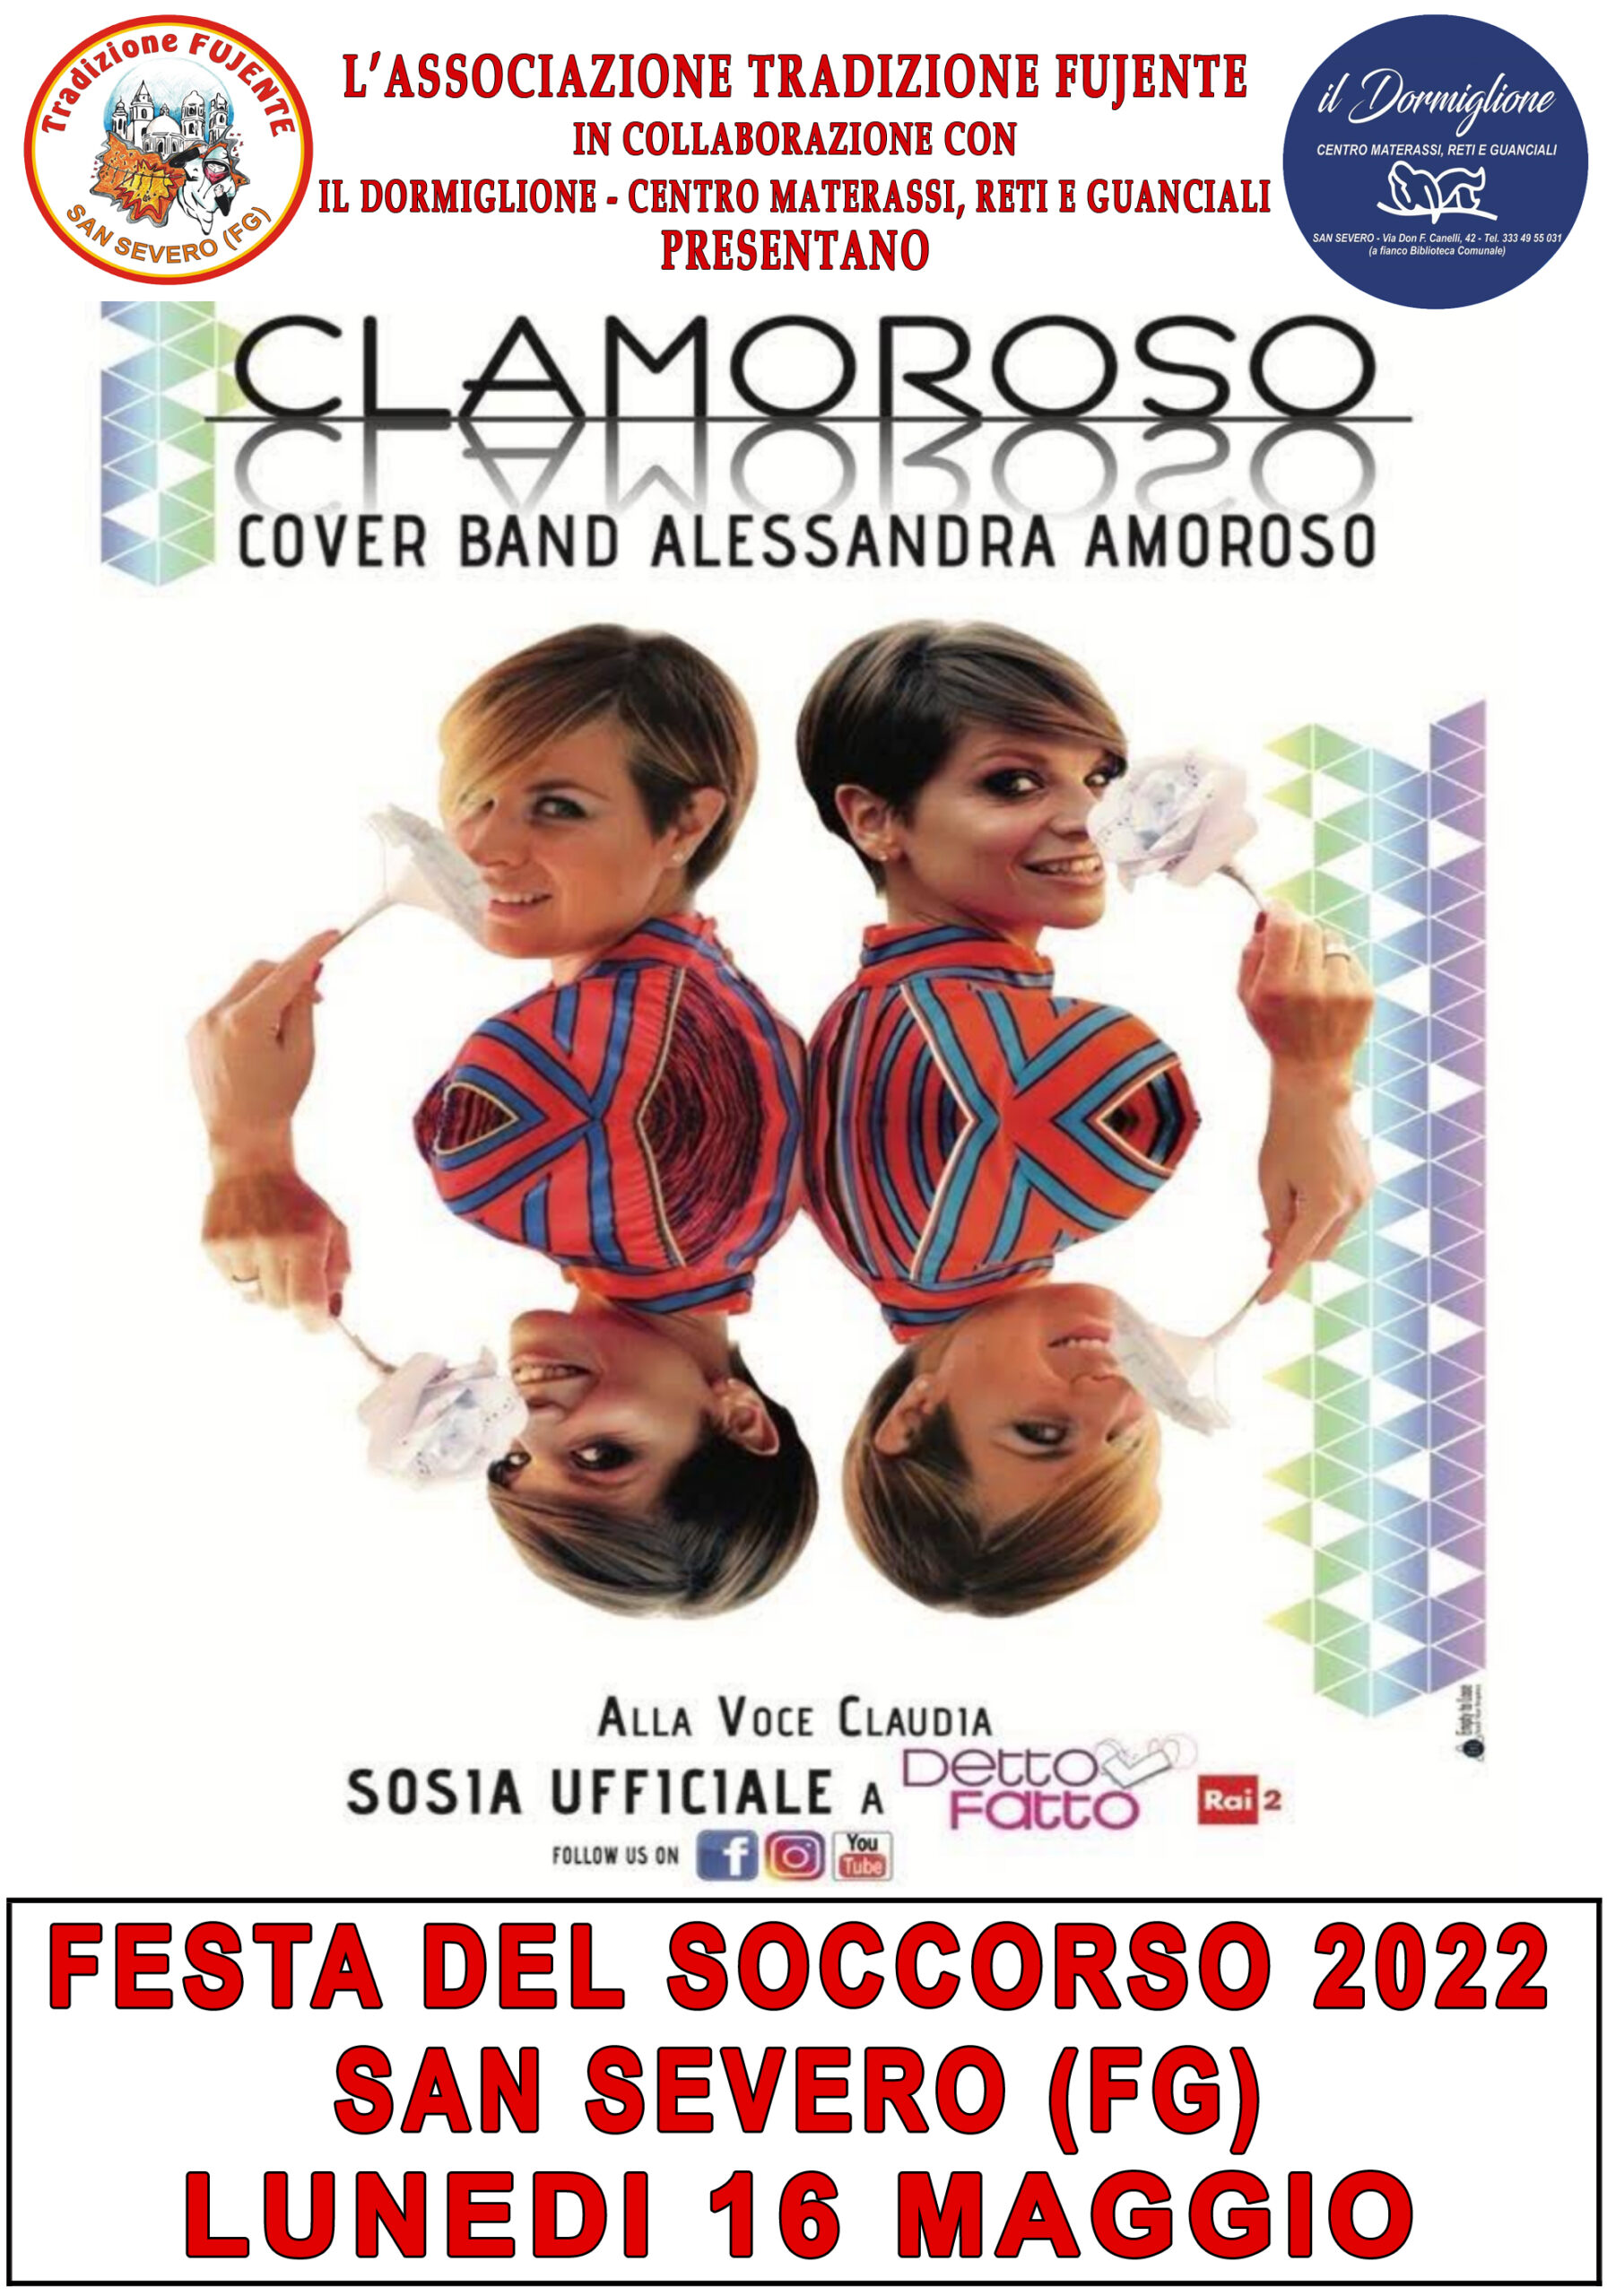 Festa del Soccorso 2022: Alessandra Amoroso in concerto con “Clamoroso”